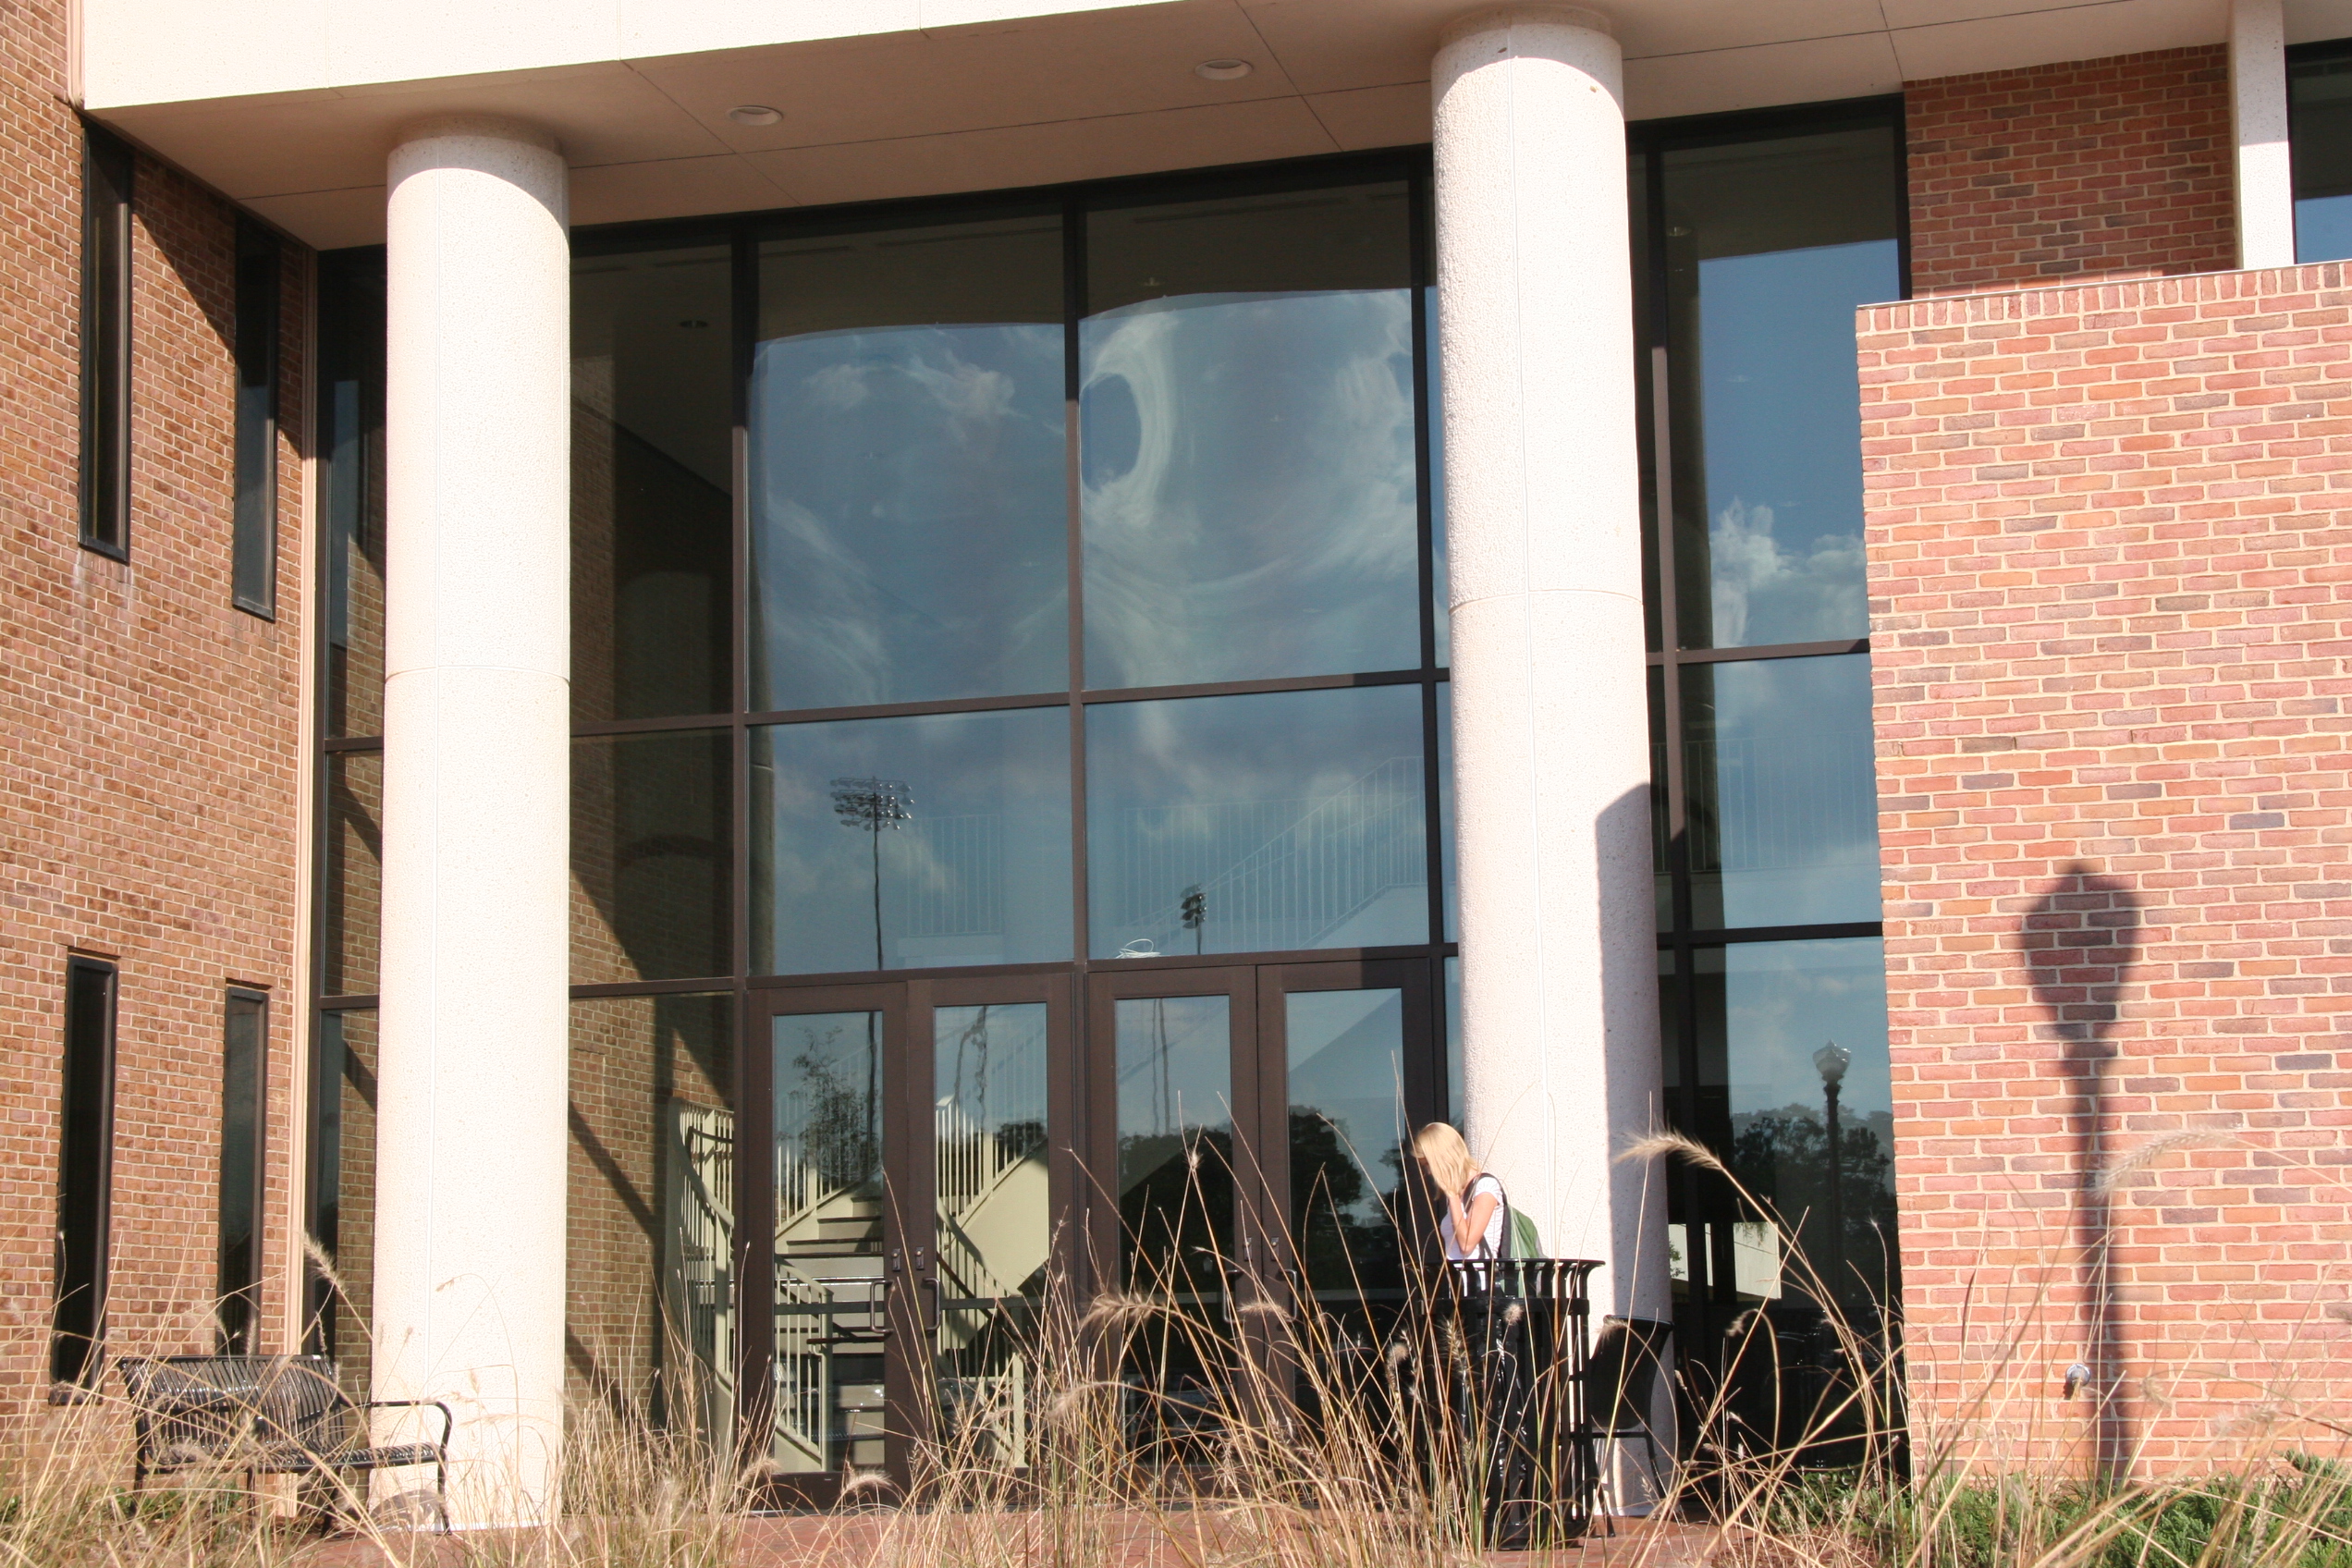 Law School Ranks Among Top 25 Law Schools | University of Alabama School of  Law